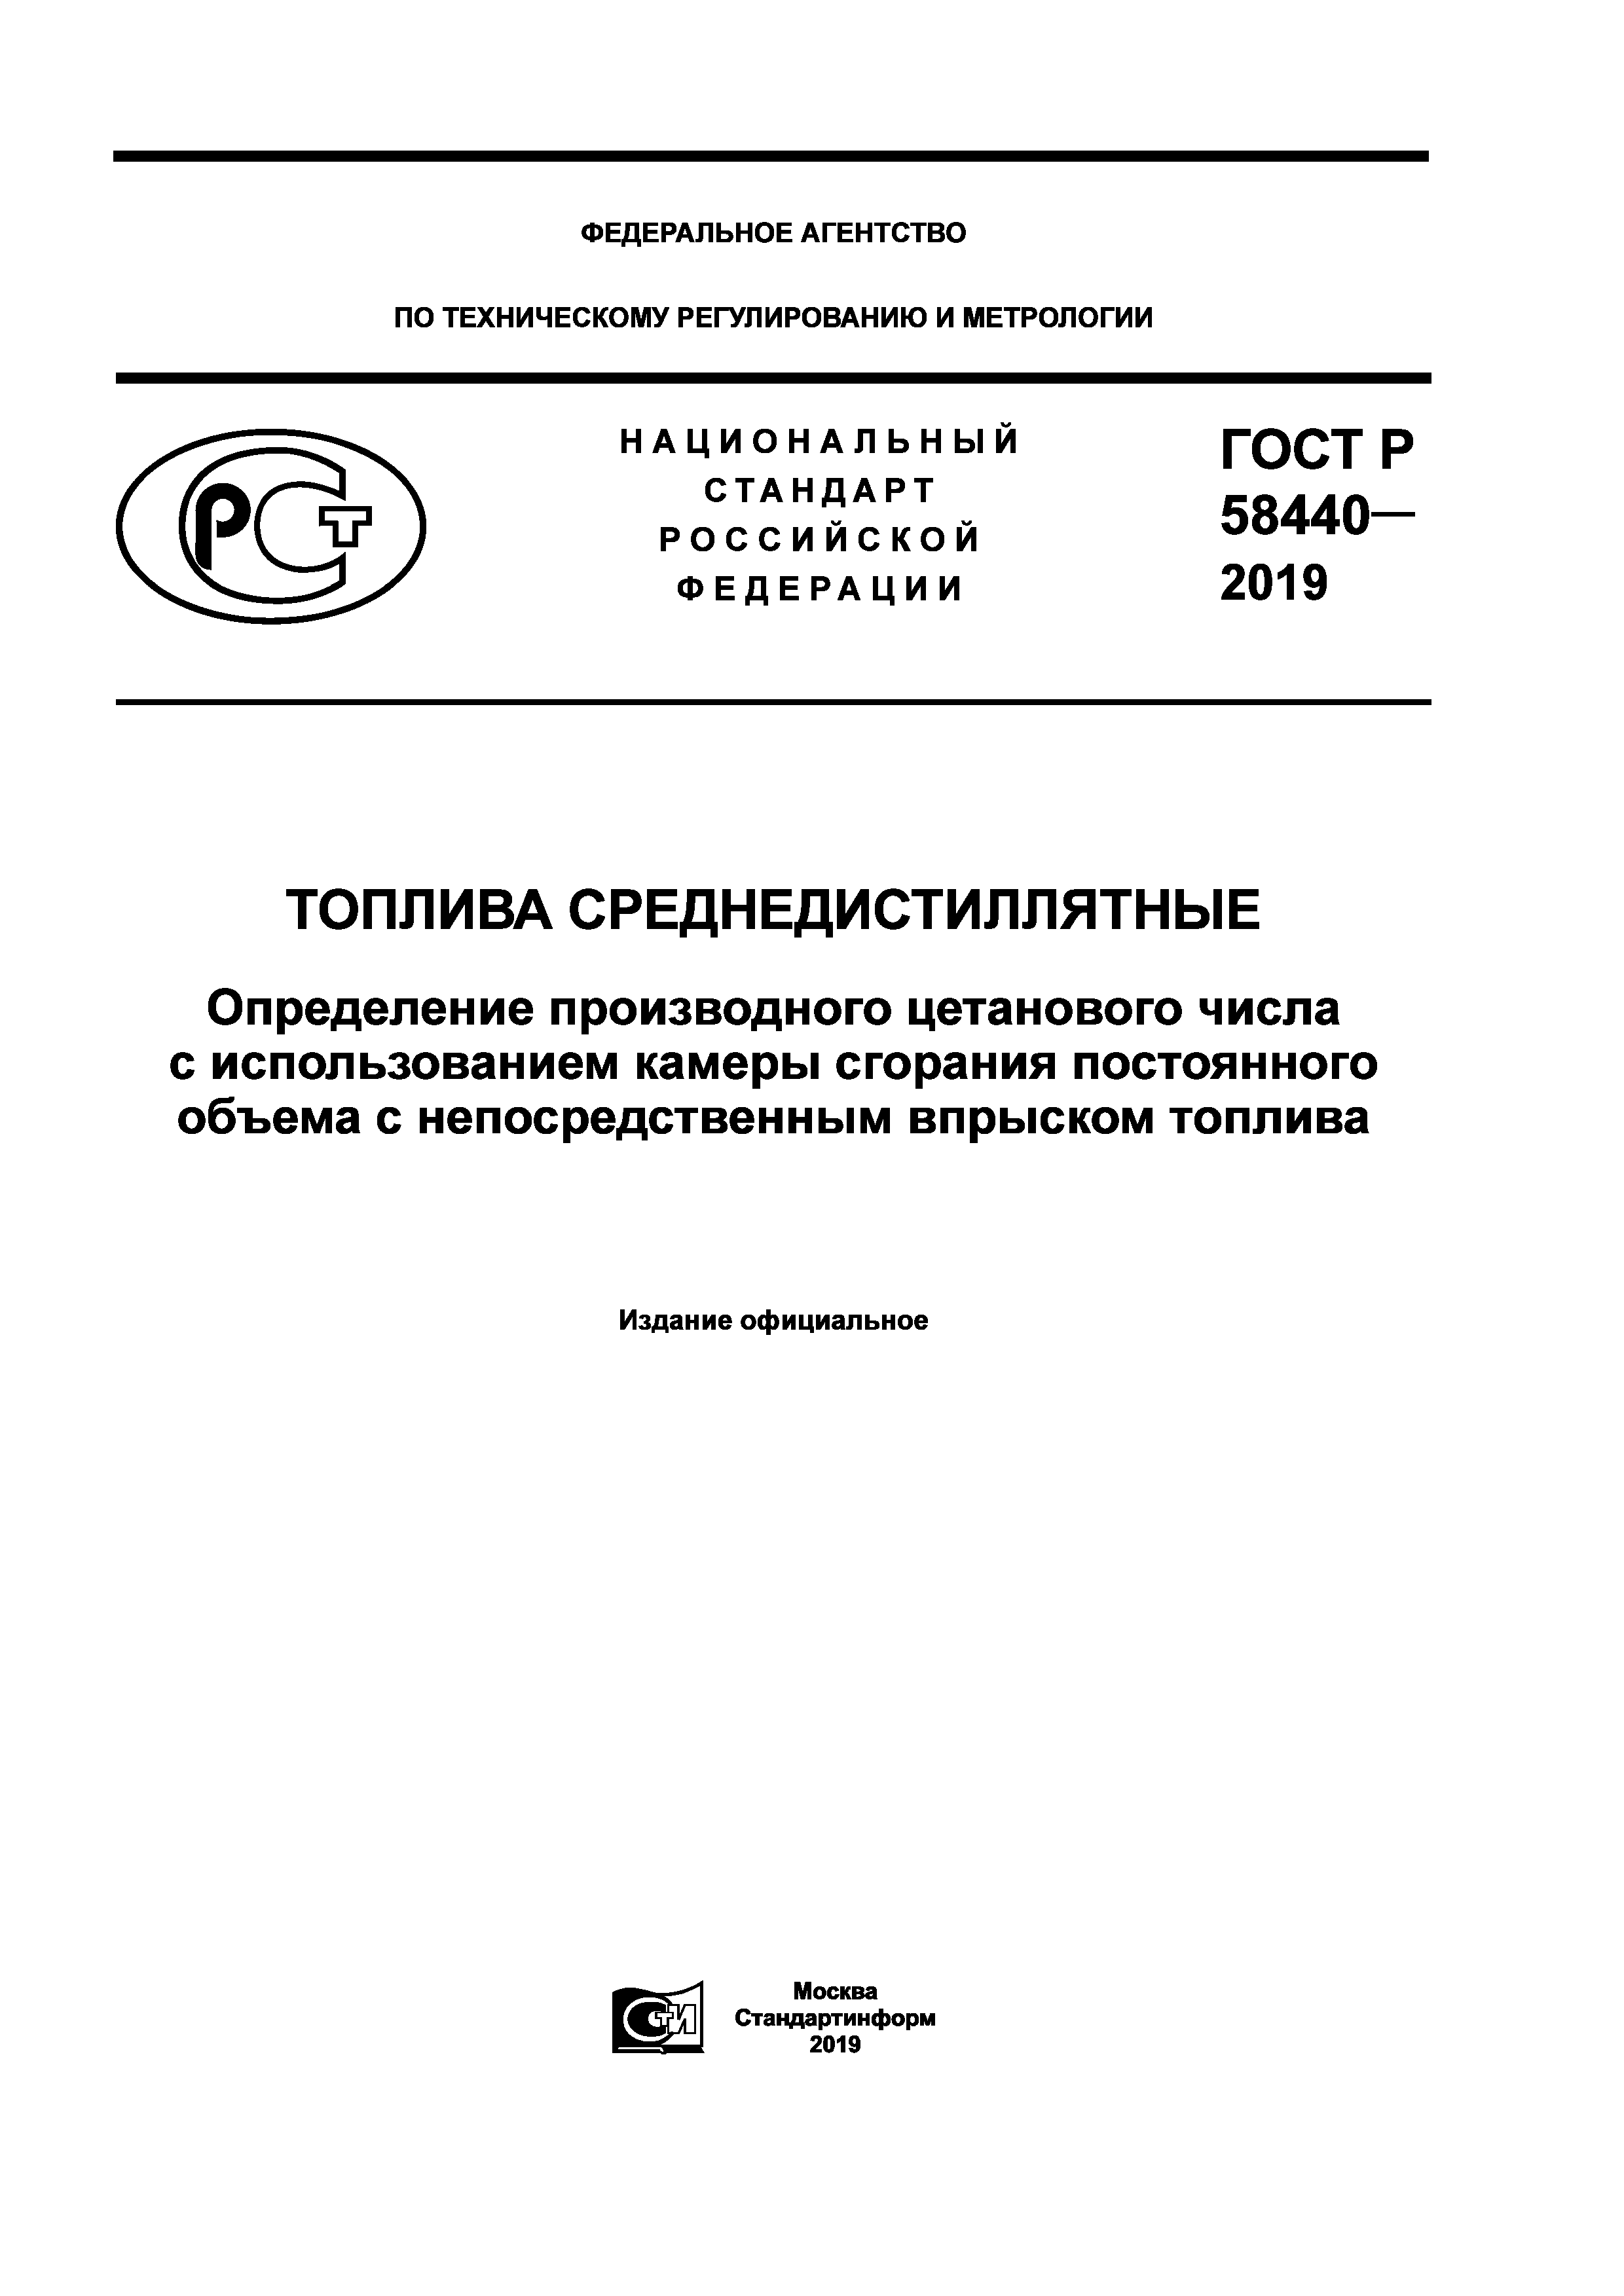 ГОСТ Р 58440-2019